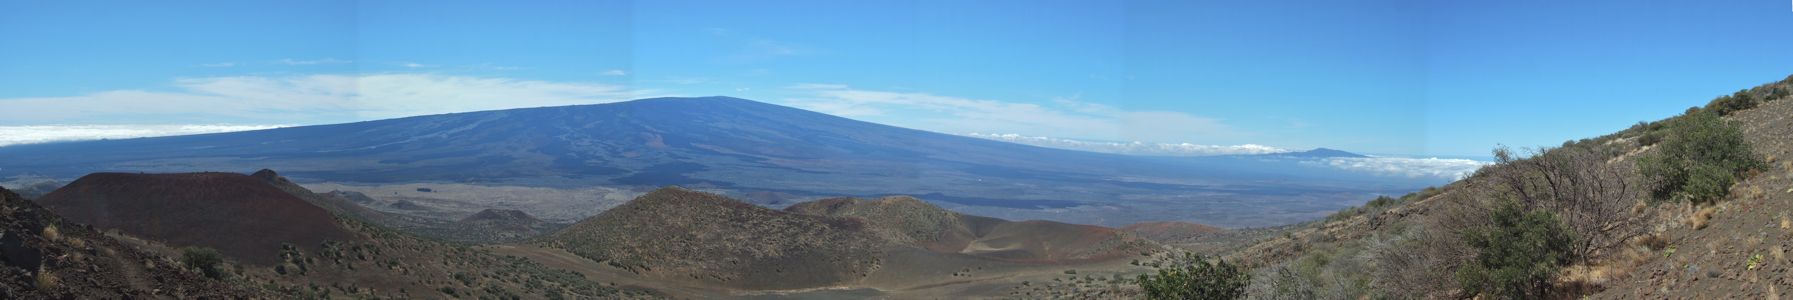 Mauna Loa Panorama - 10/2012